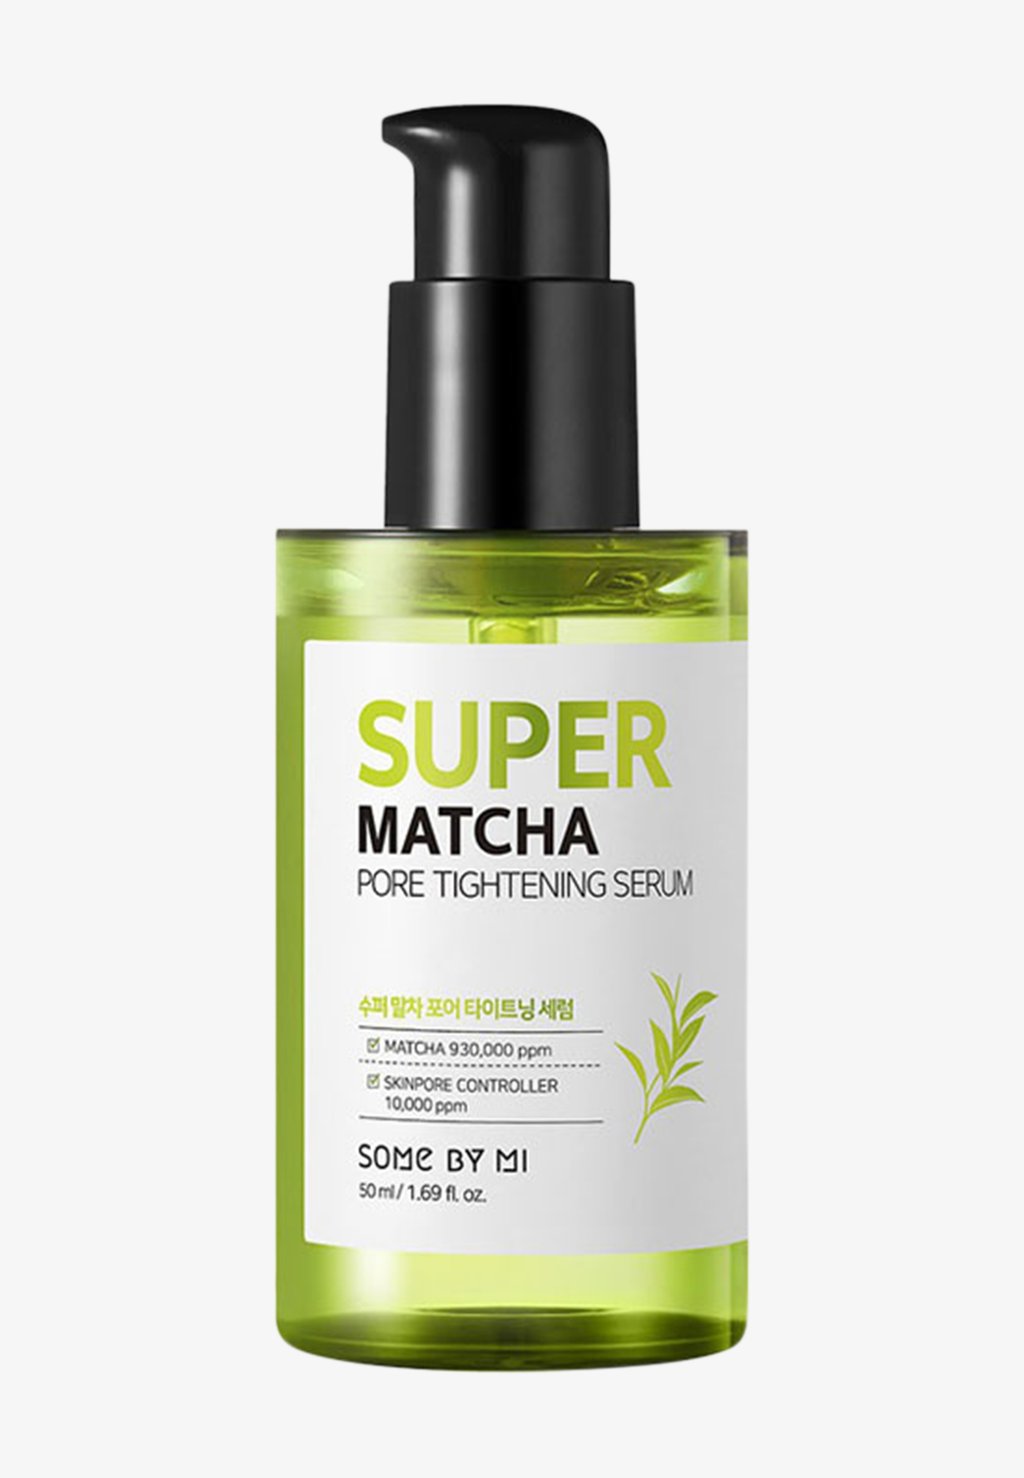 сыворотка matcha pore tightening serum Сыворотка Super Matcha Pore Tightening Serum SOME BY MI